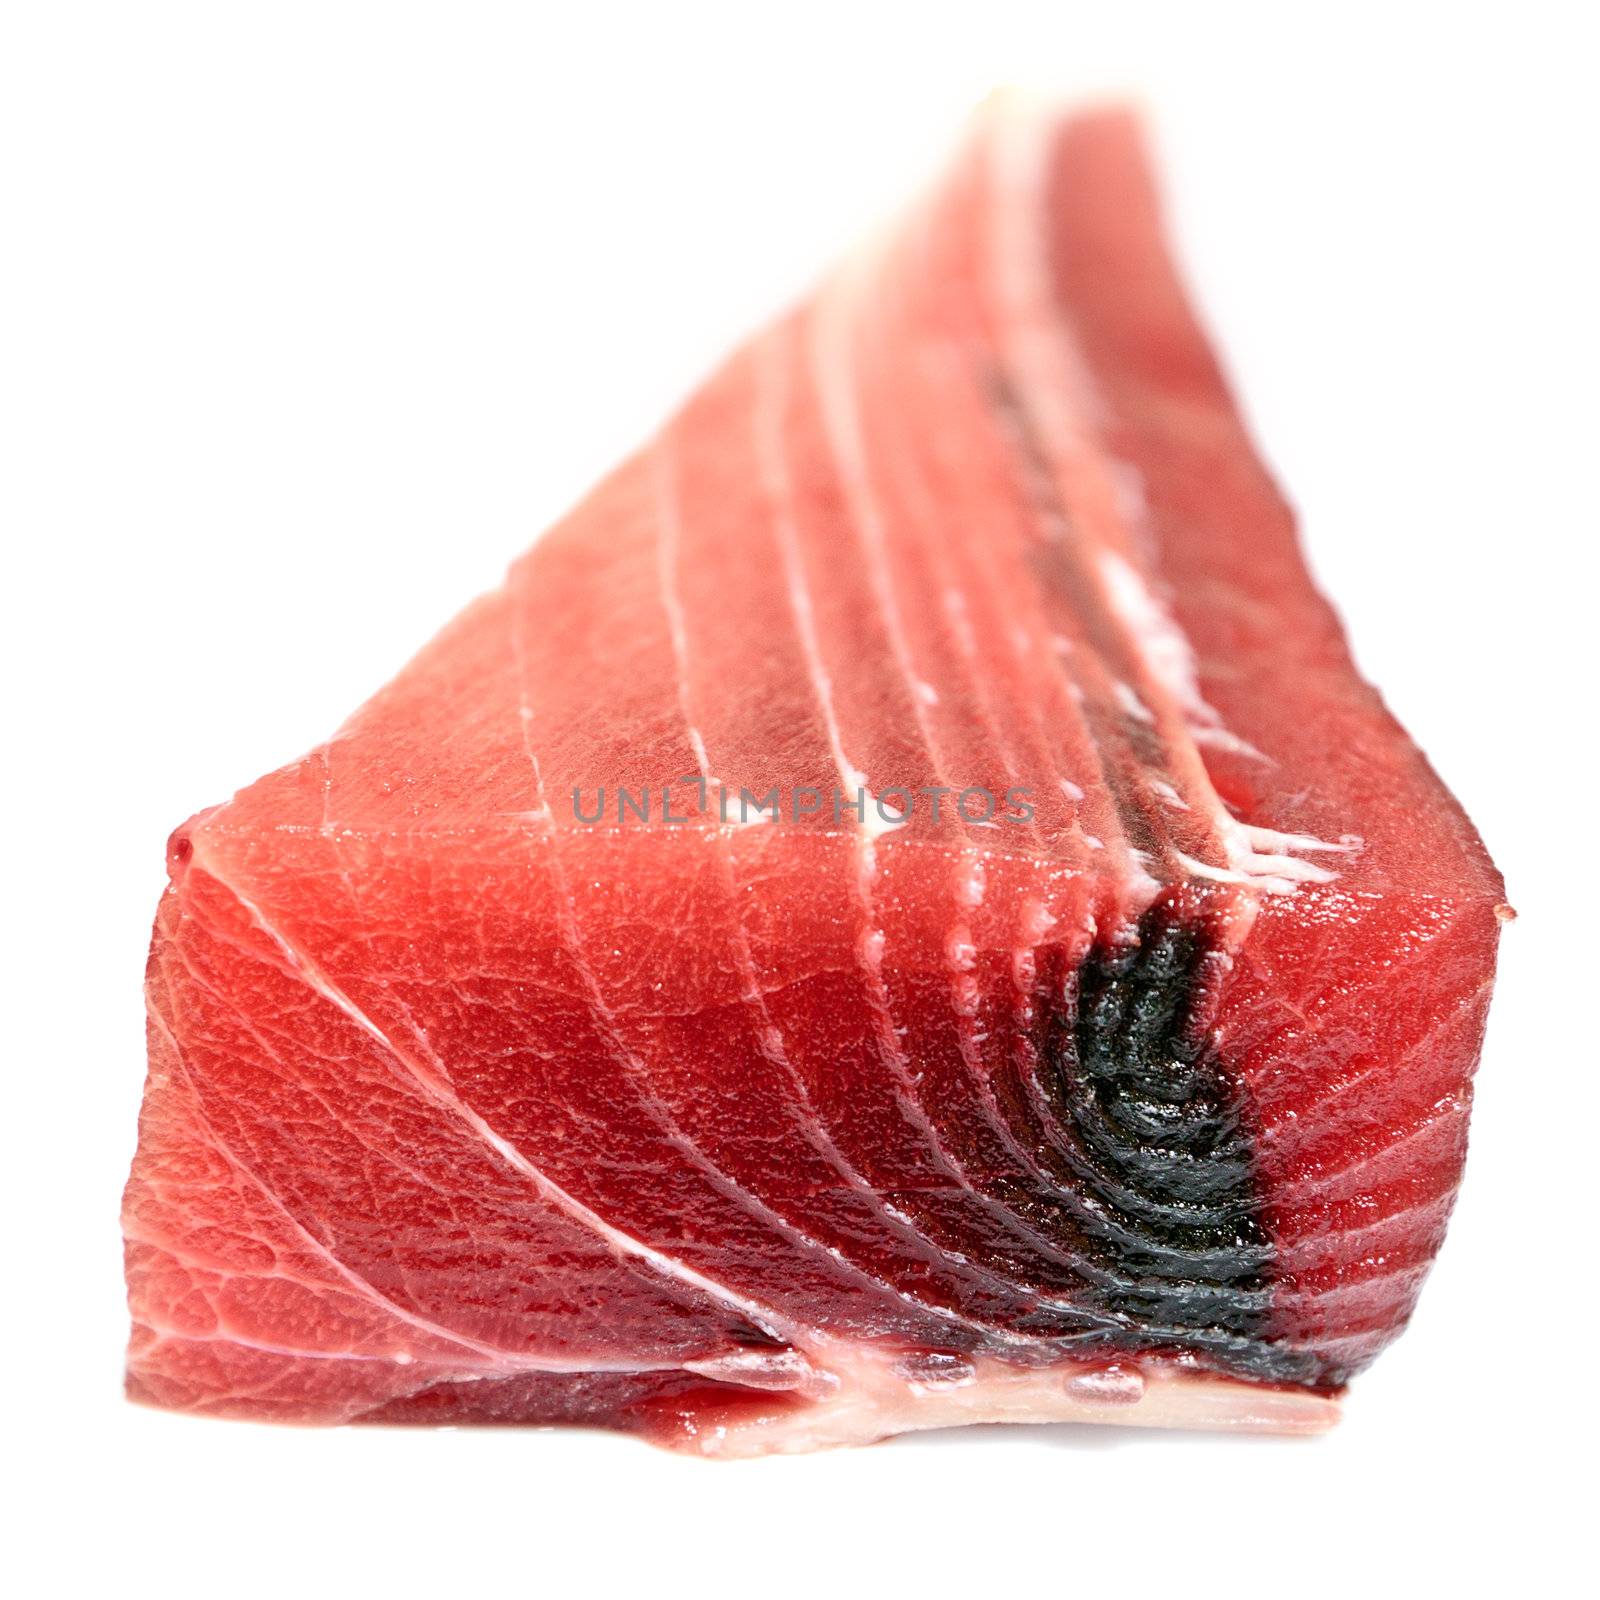 A piece of fresh tuna by dsmsoft